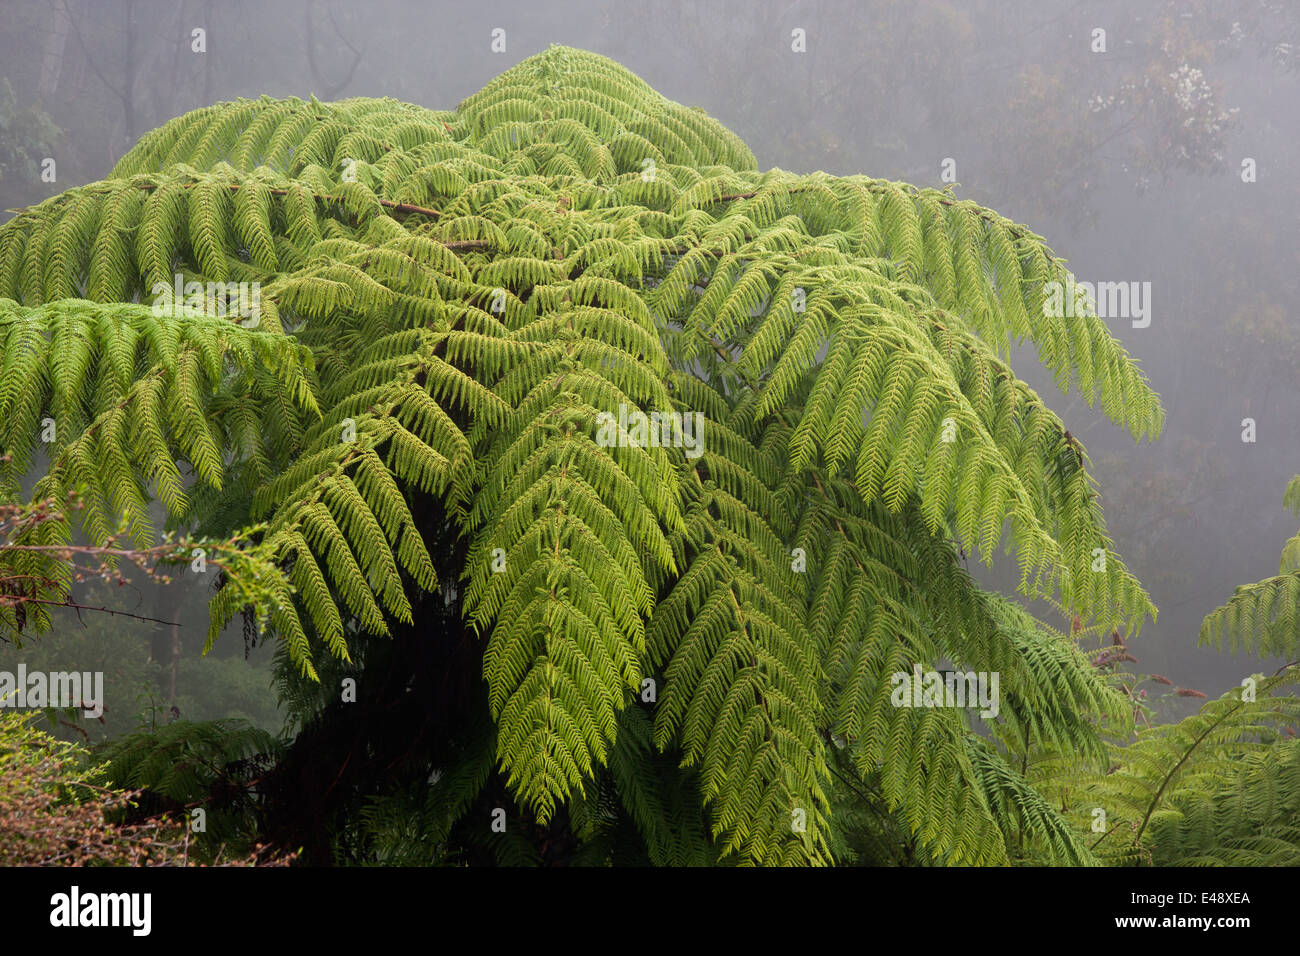 Crown of the Australian tree fern in the mist Stock Photo